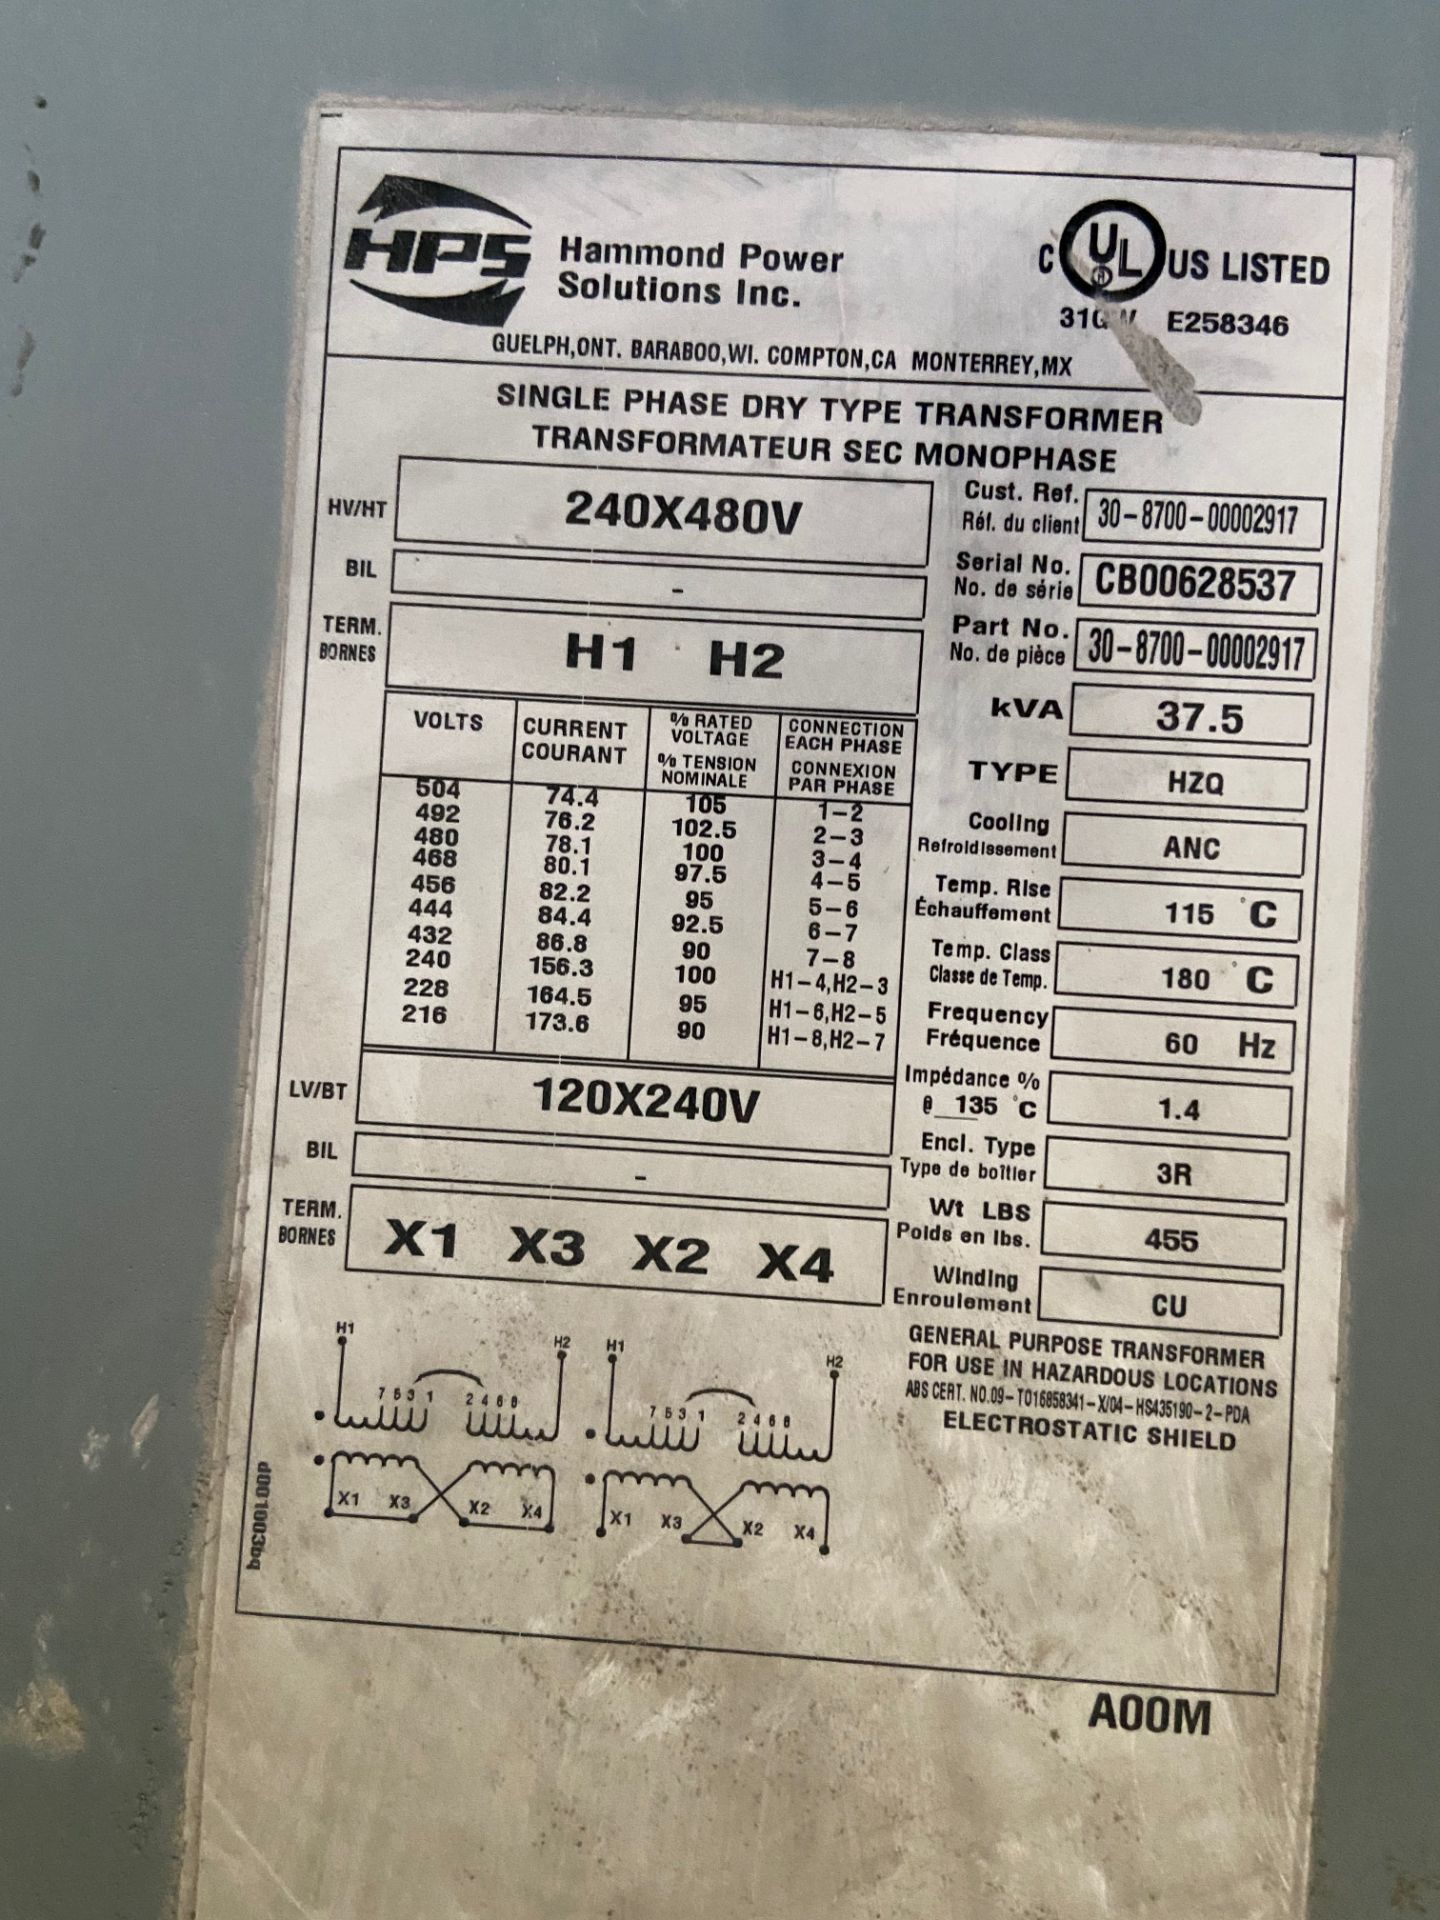 HPS Single Phase Dry Type Transformer, 240X480V, Serial# CB00628537, For Use in Hazardous - Image 2 of 3